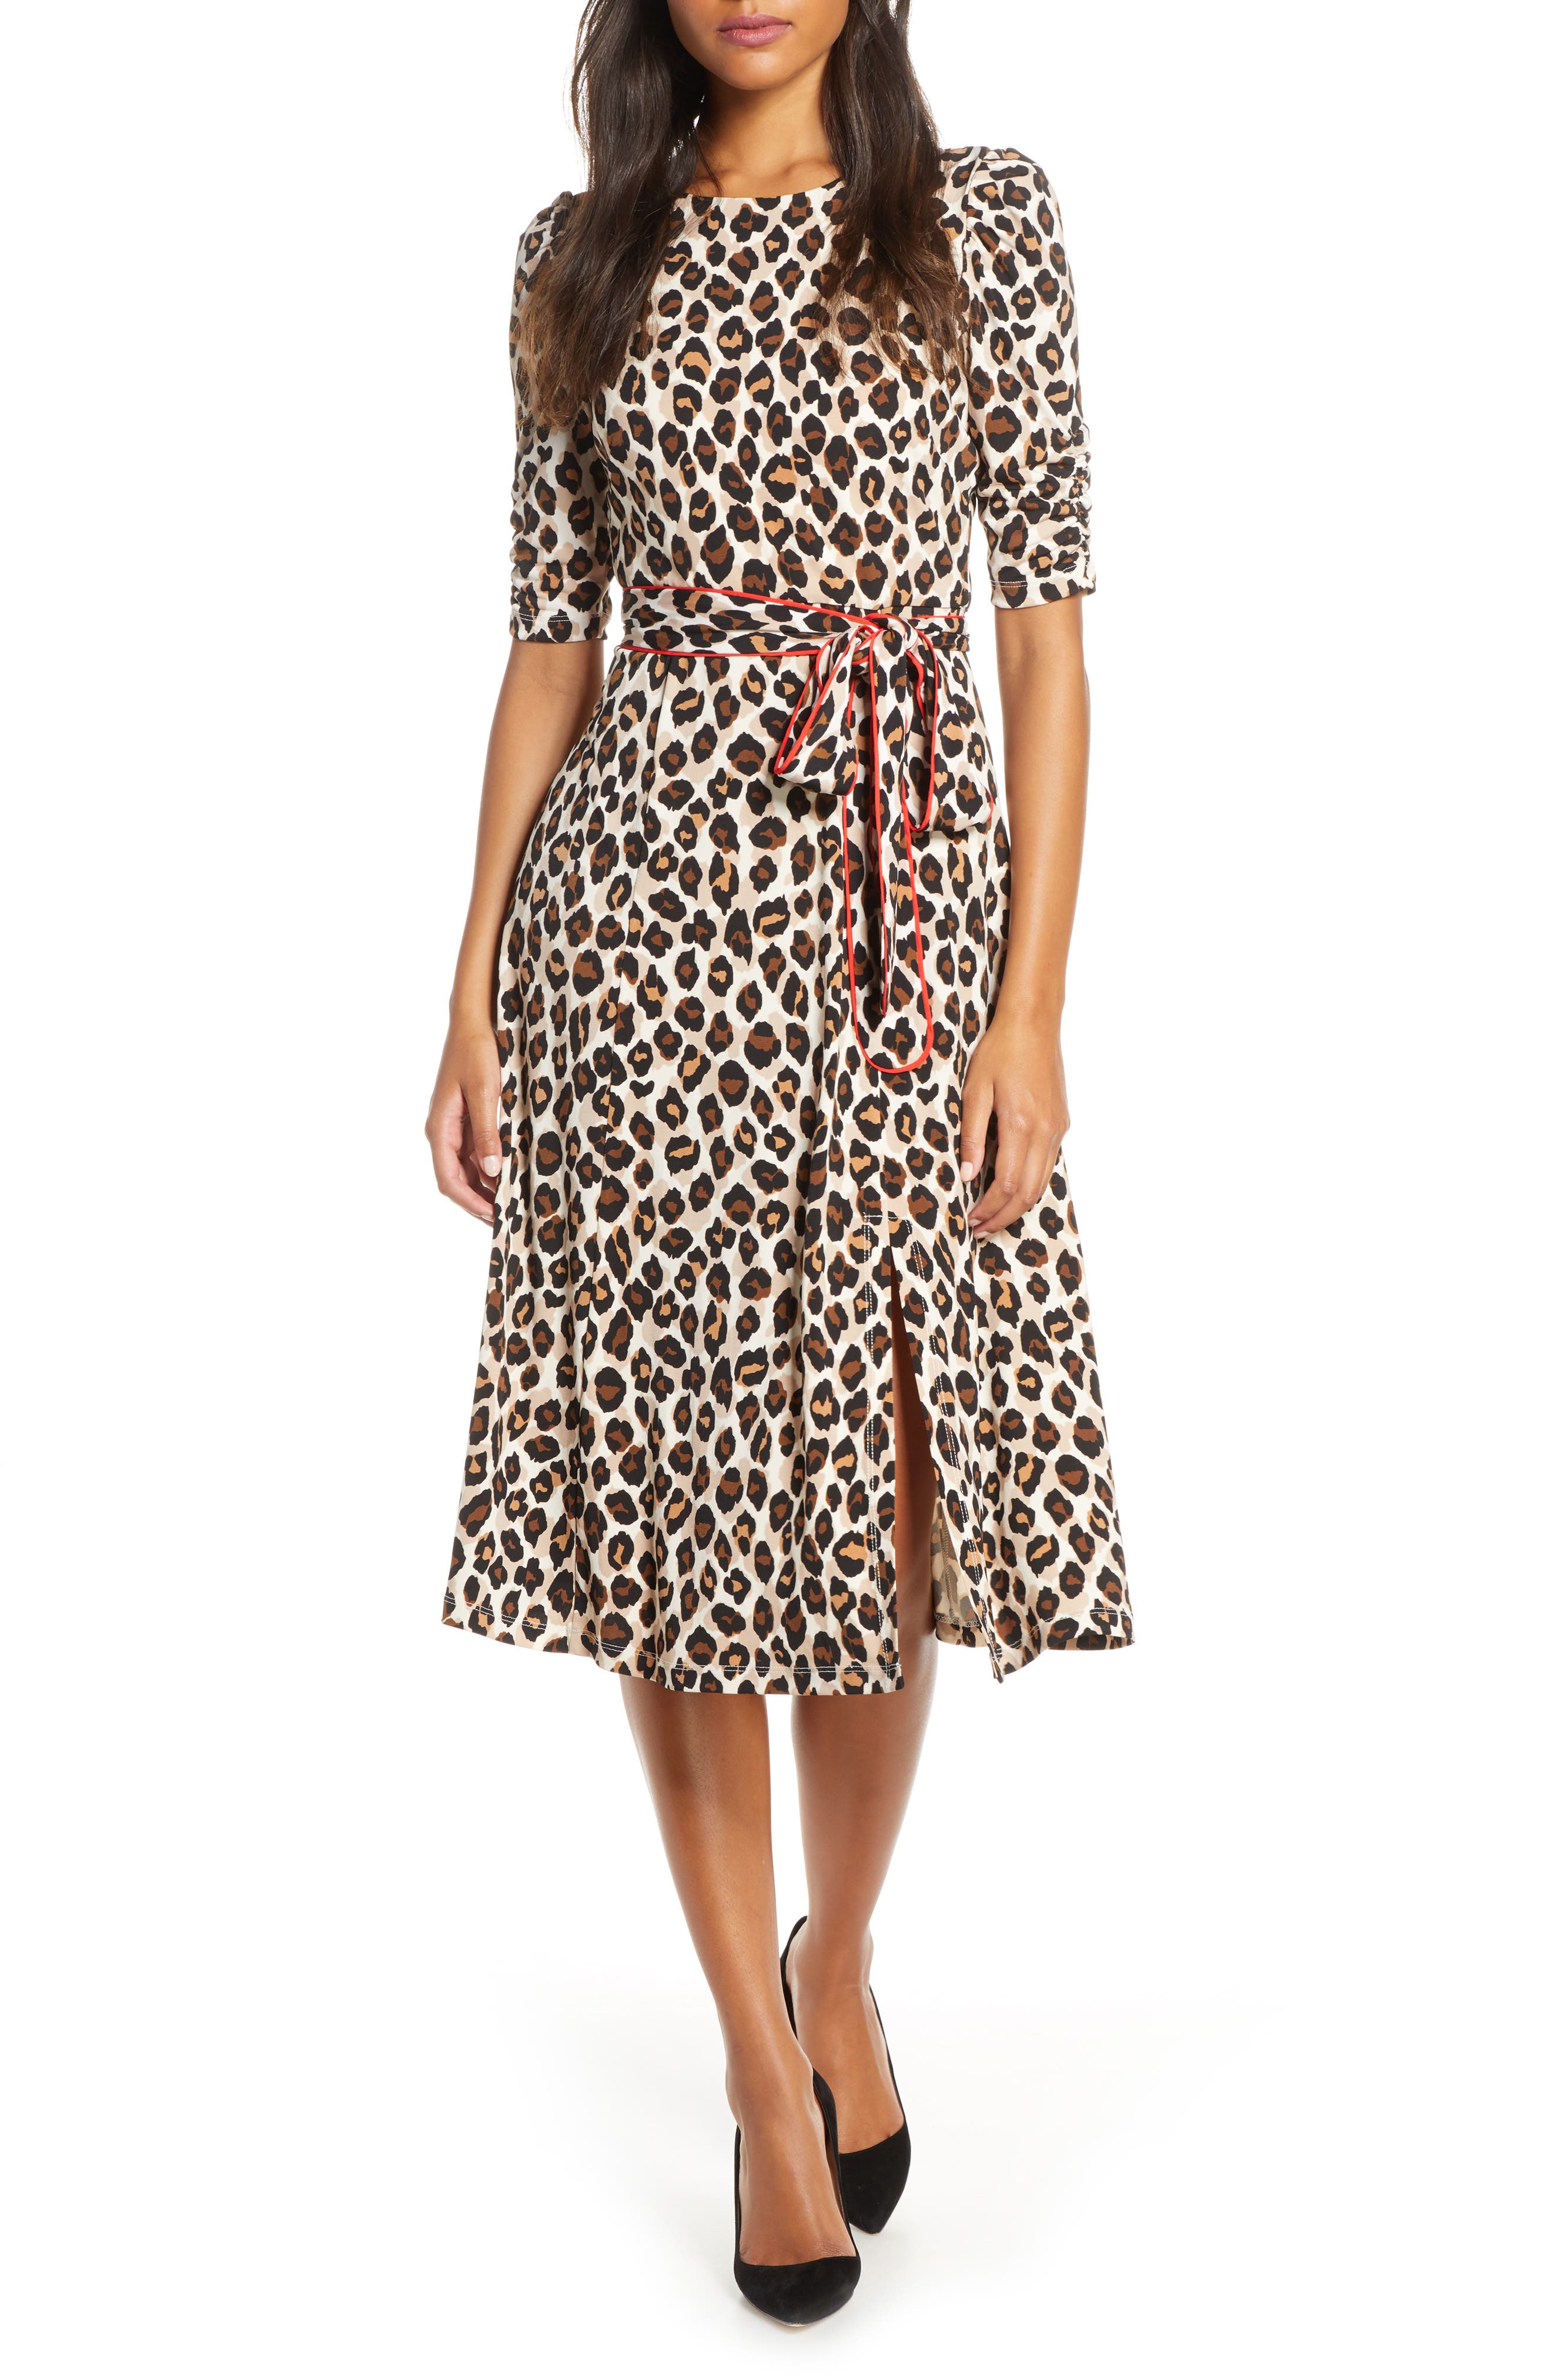 eliza j leopard dress